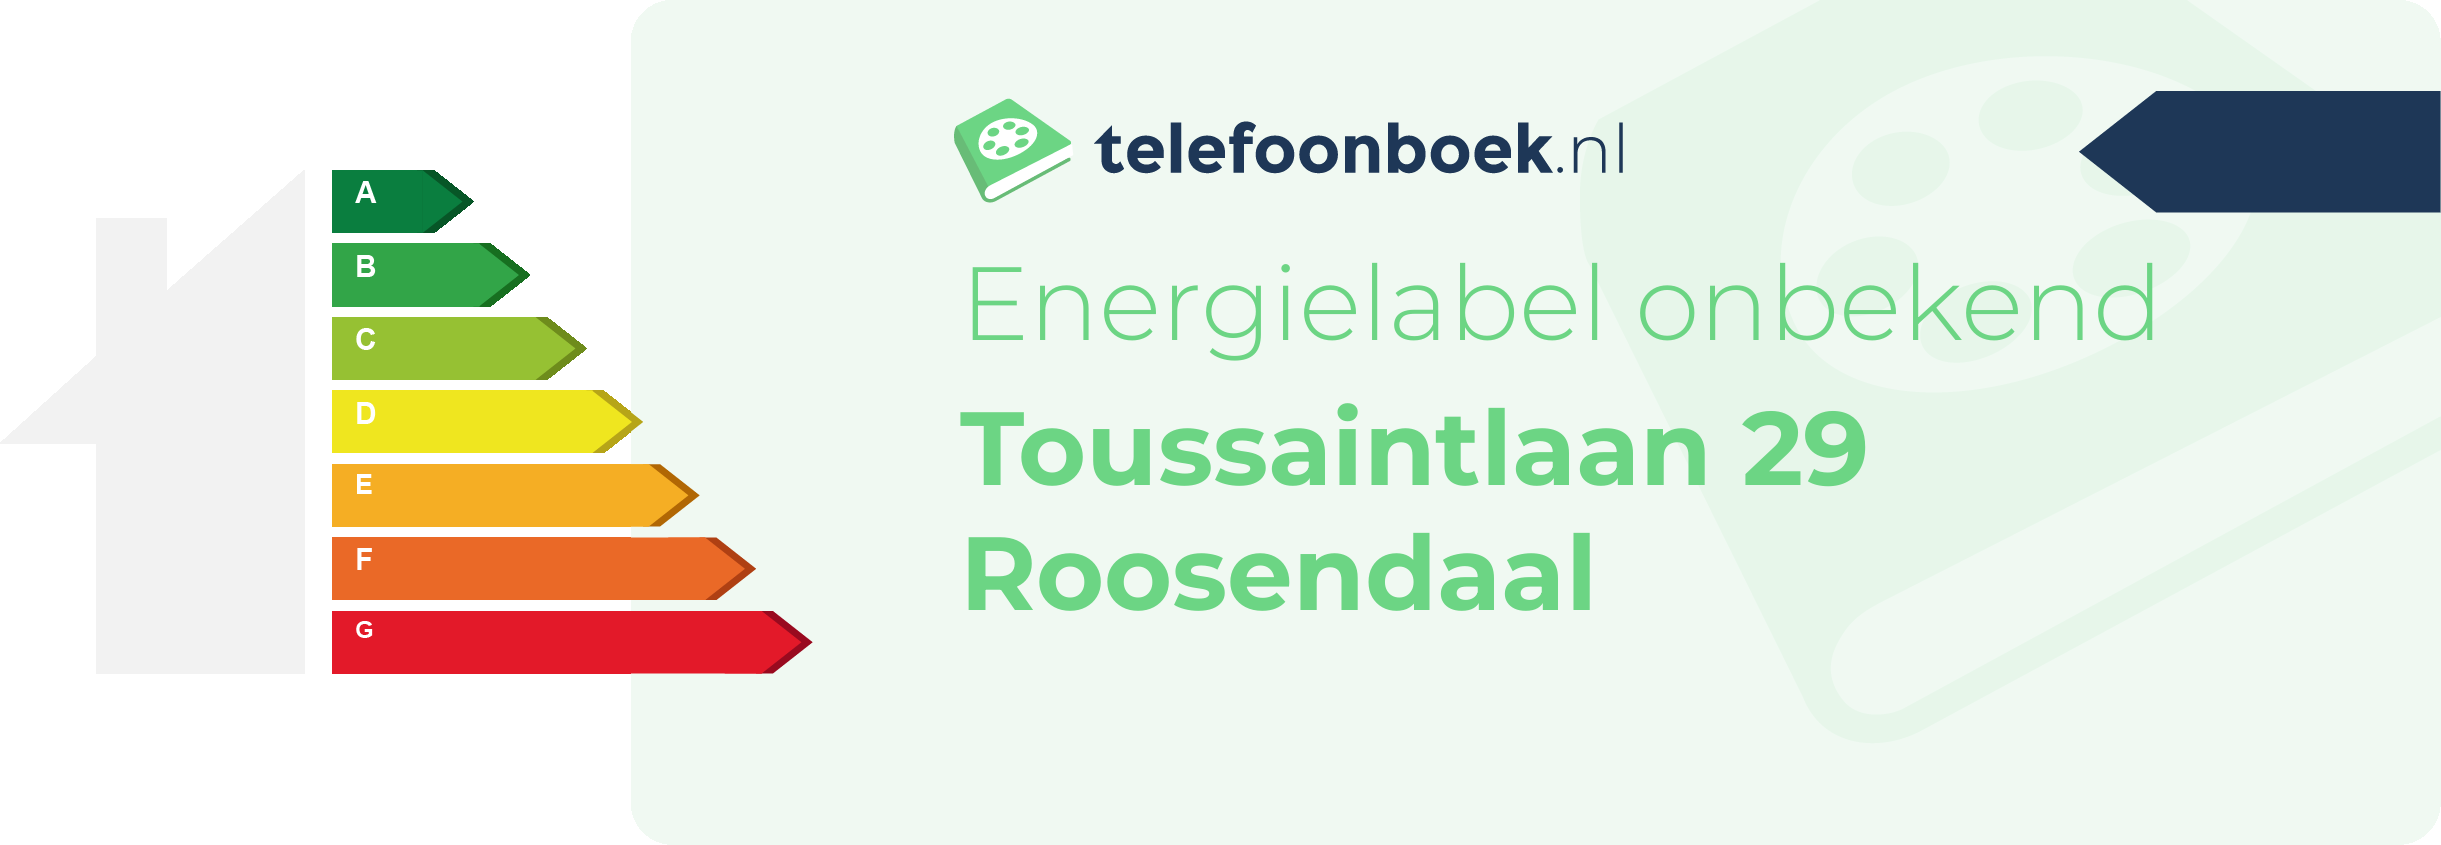 Energielabel Toussaintlaan 29 Roosendaal